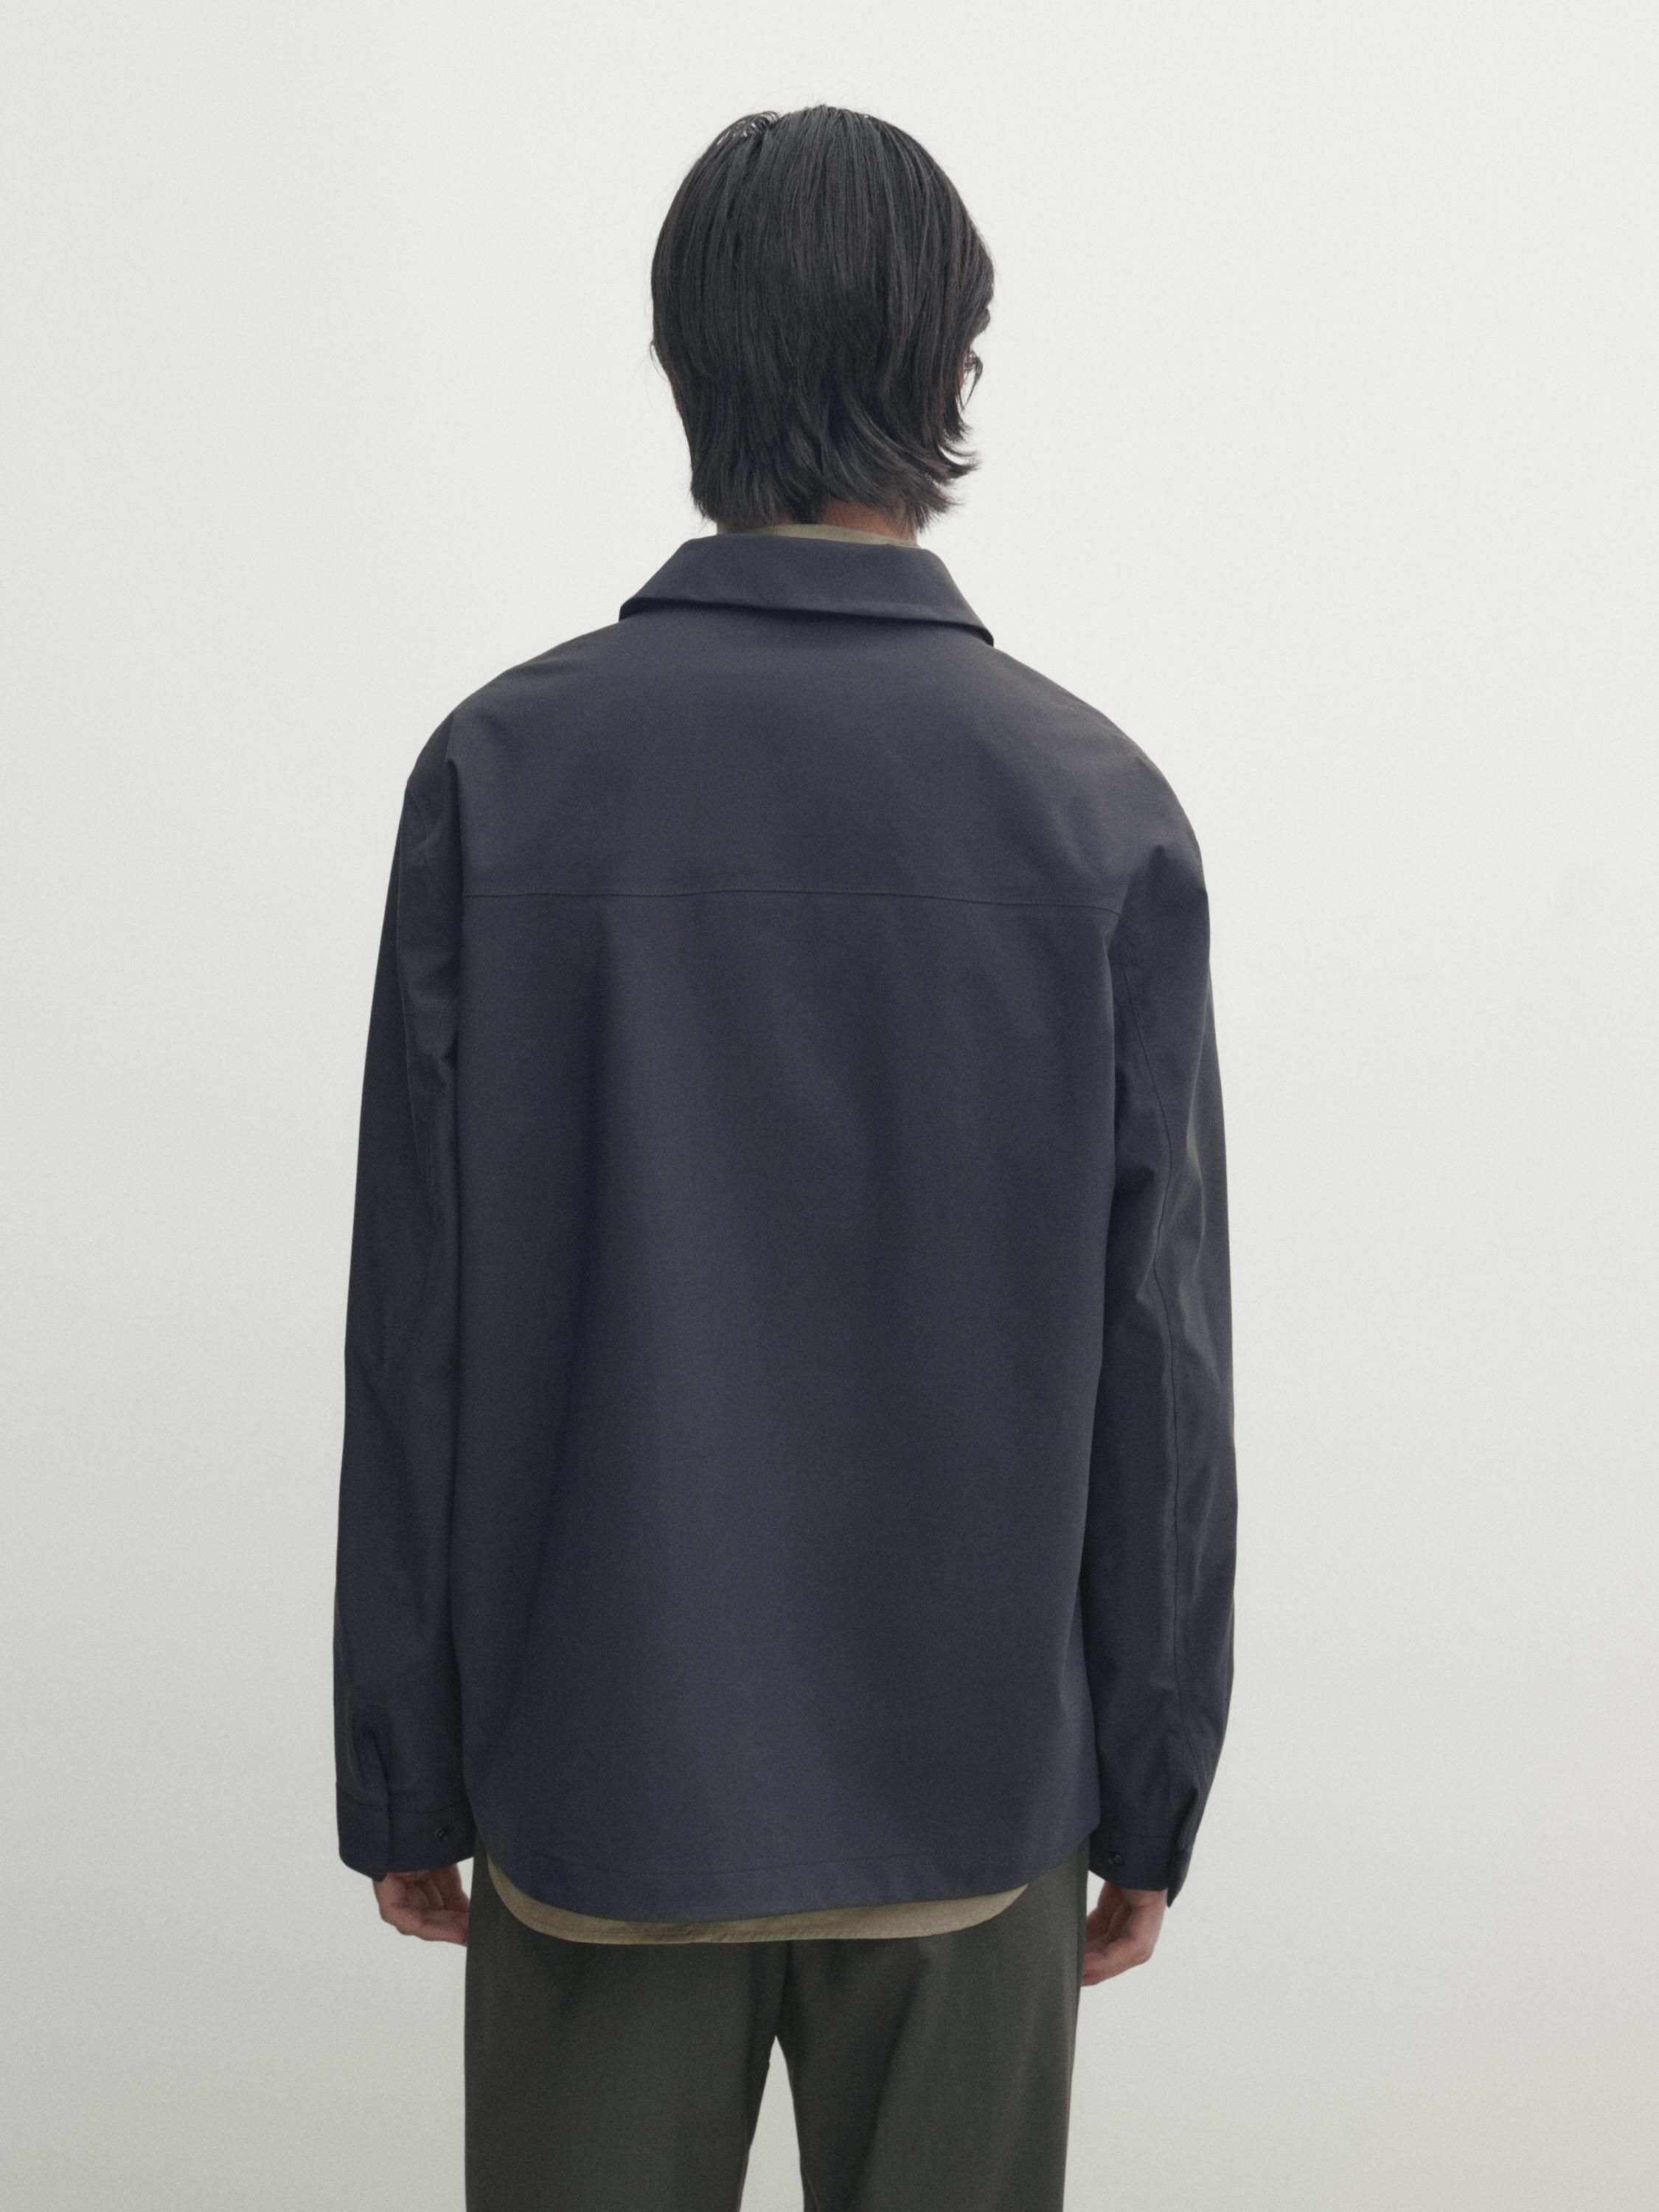 2-in-1 technical jacket - Anthracite grey | ZARA Canada